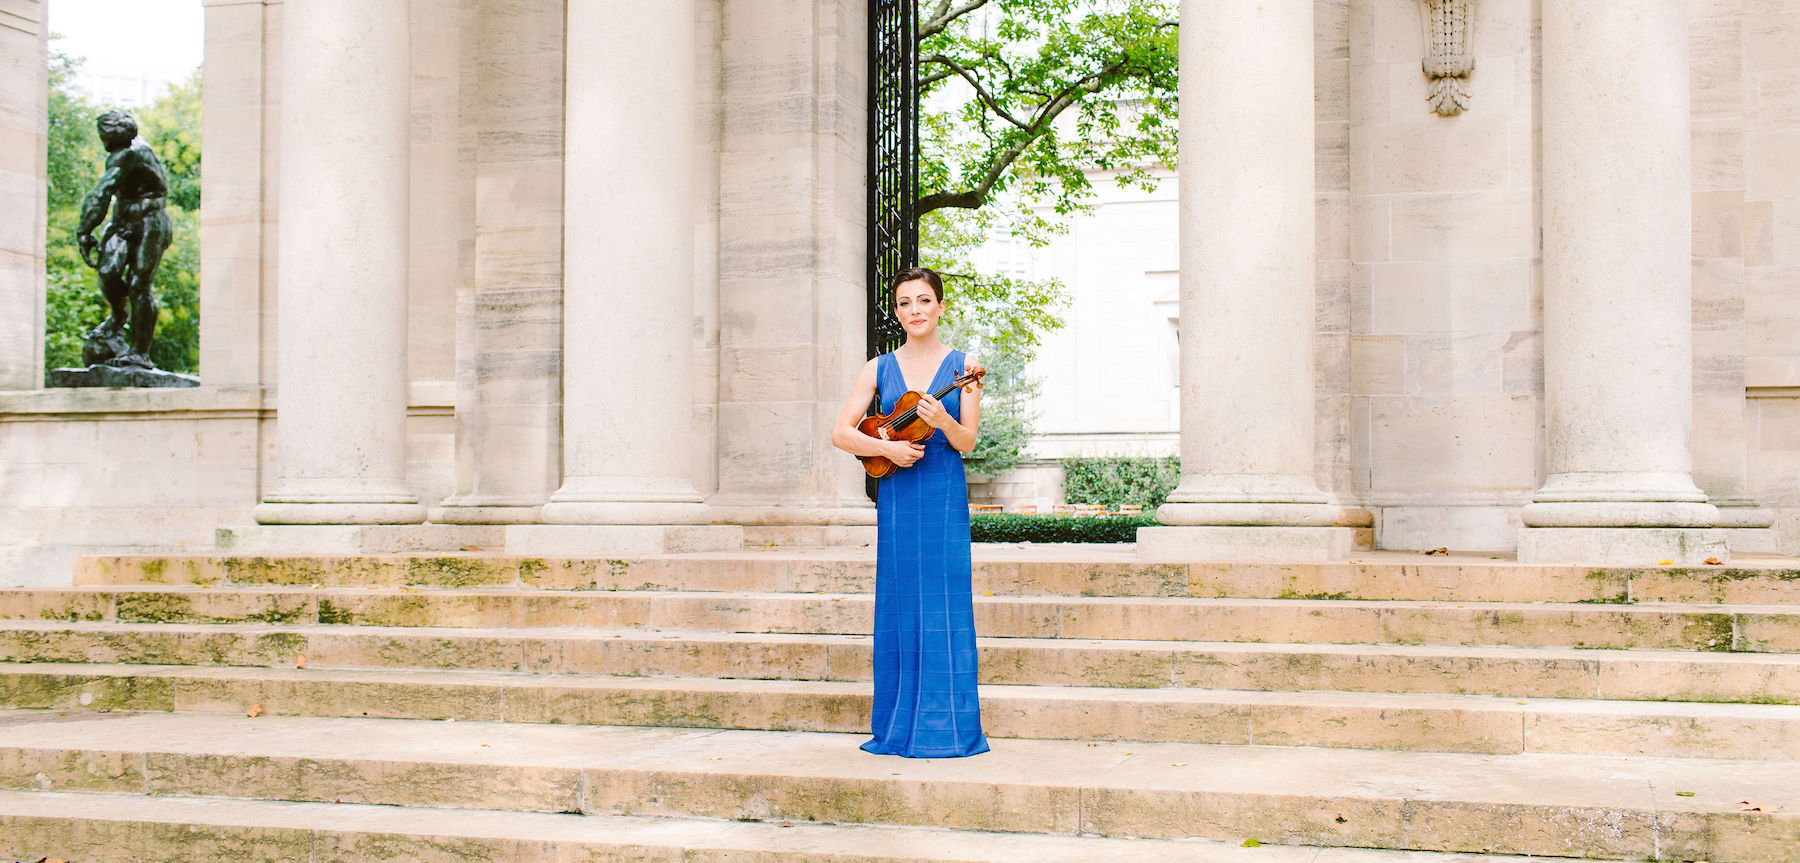 Violin Lessons Philadelphia | Philly Violin Lessons with Andrea Levine Violin | Learn the Violin in Philadelphia